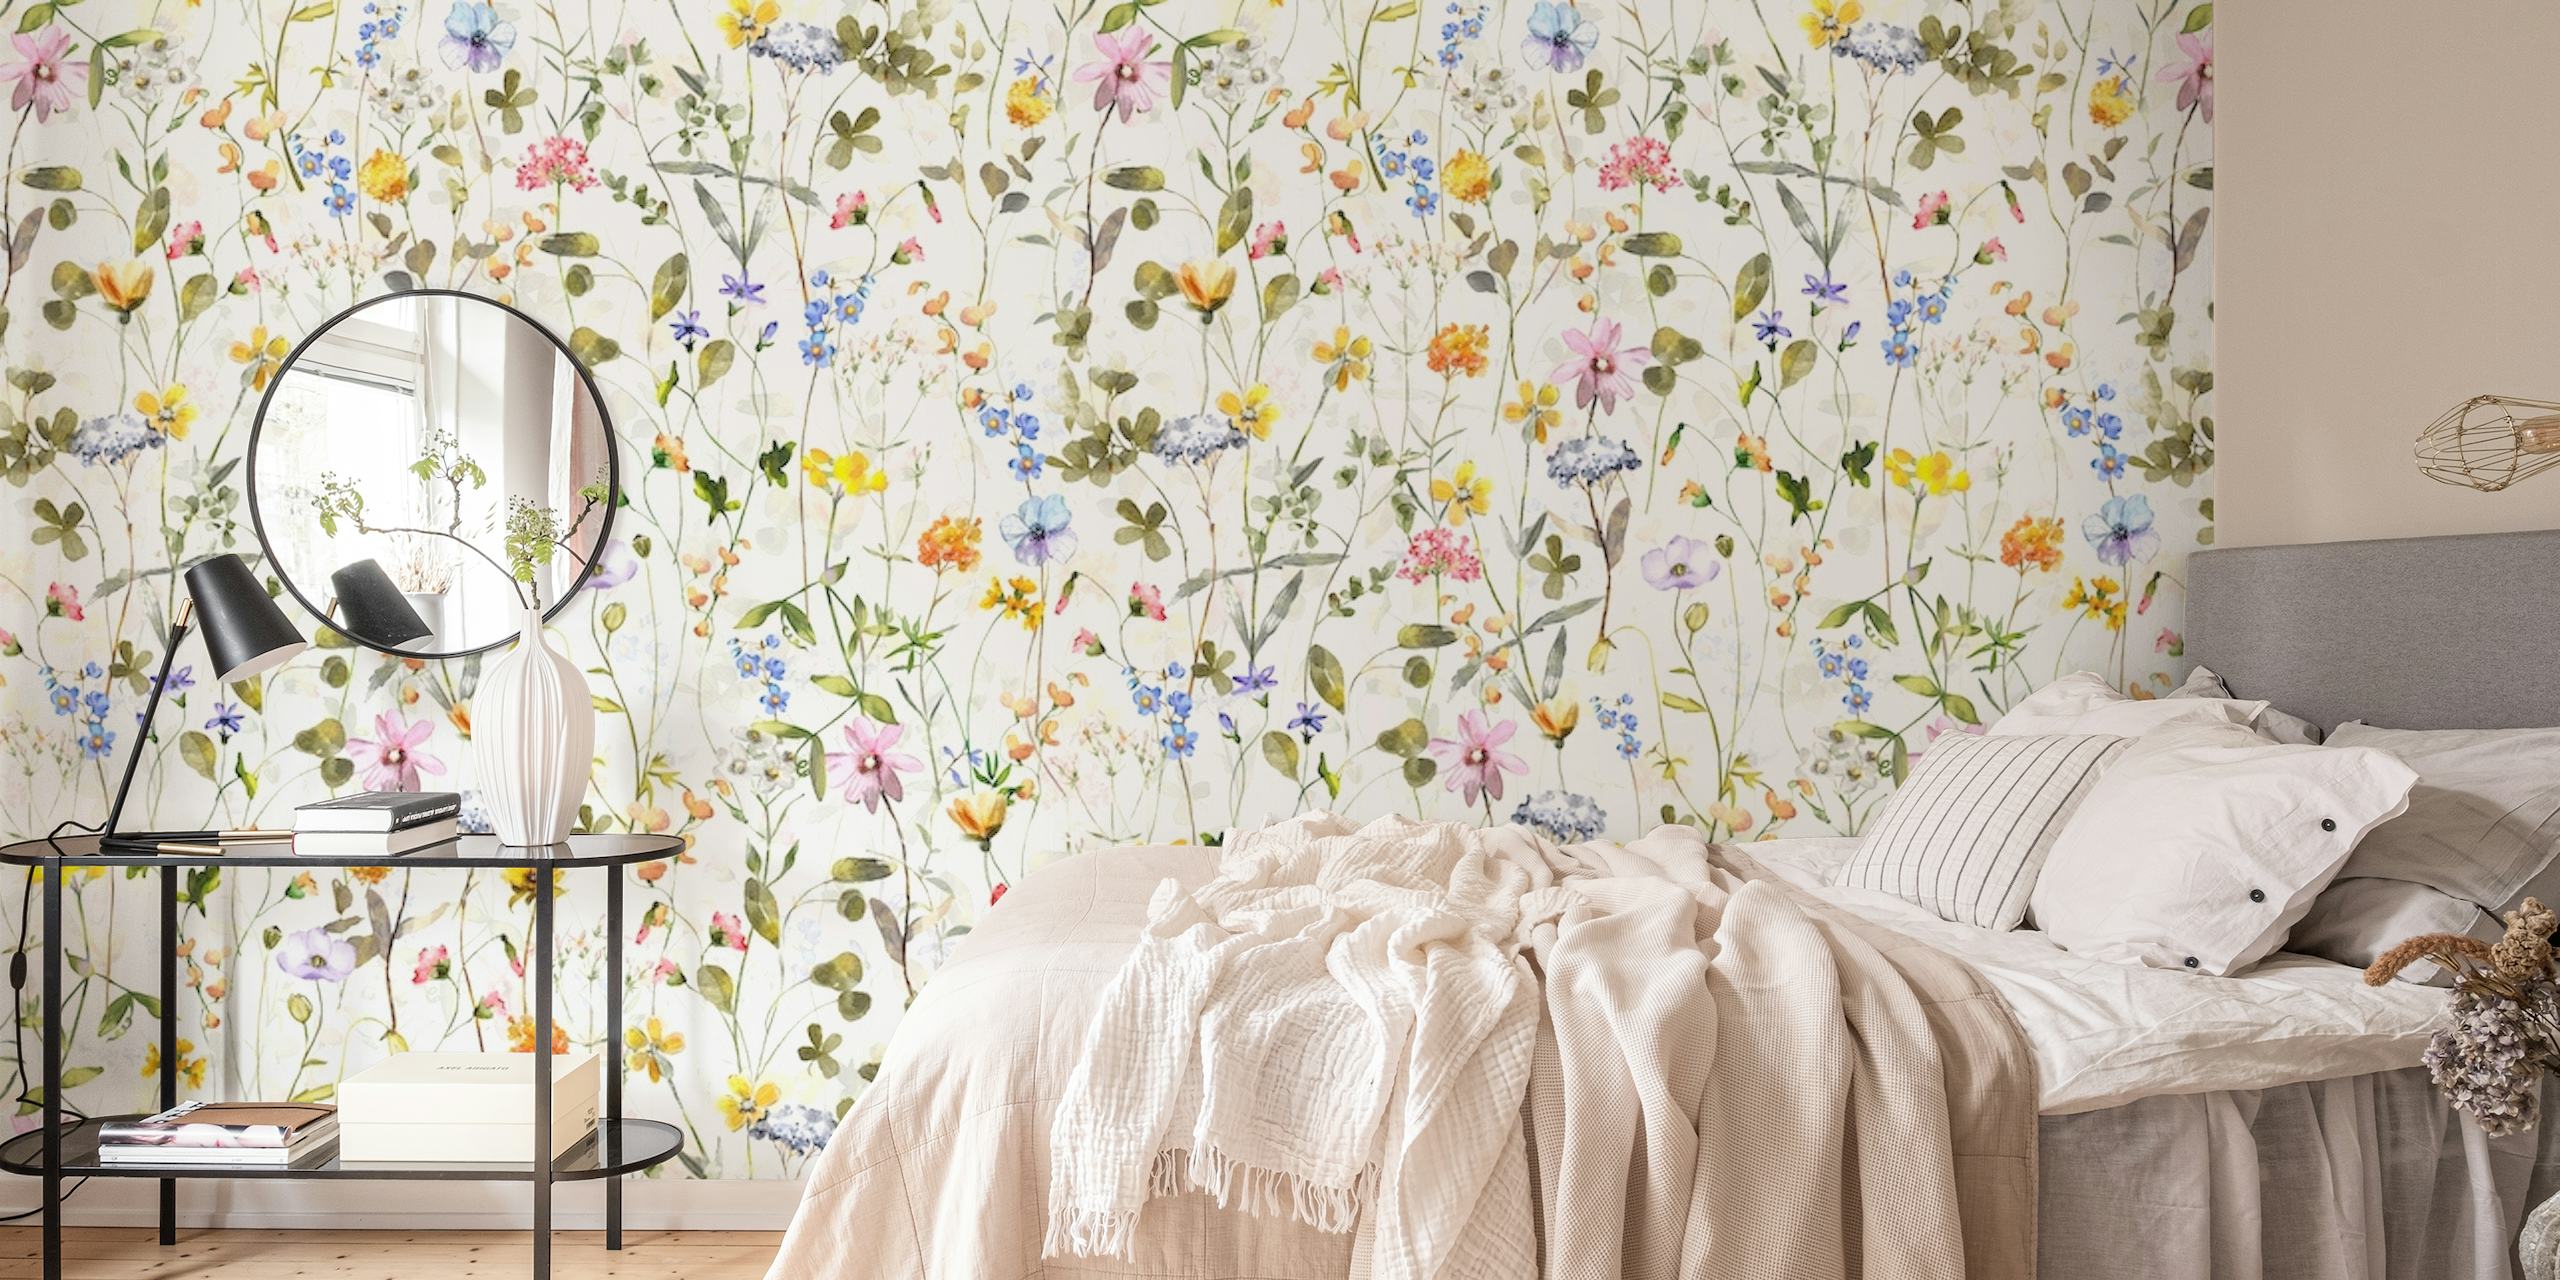 Watercolor Wildflowers Meadow wallpaper